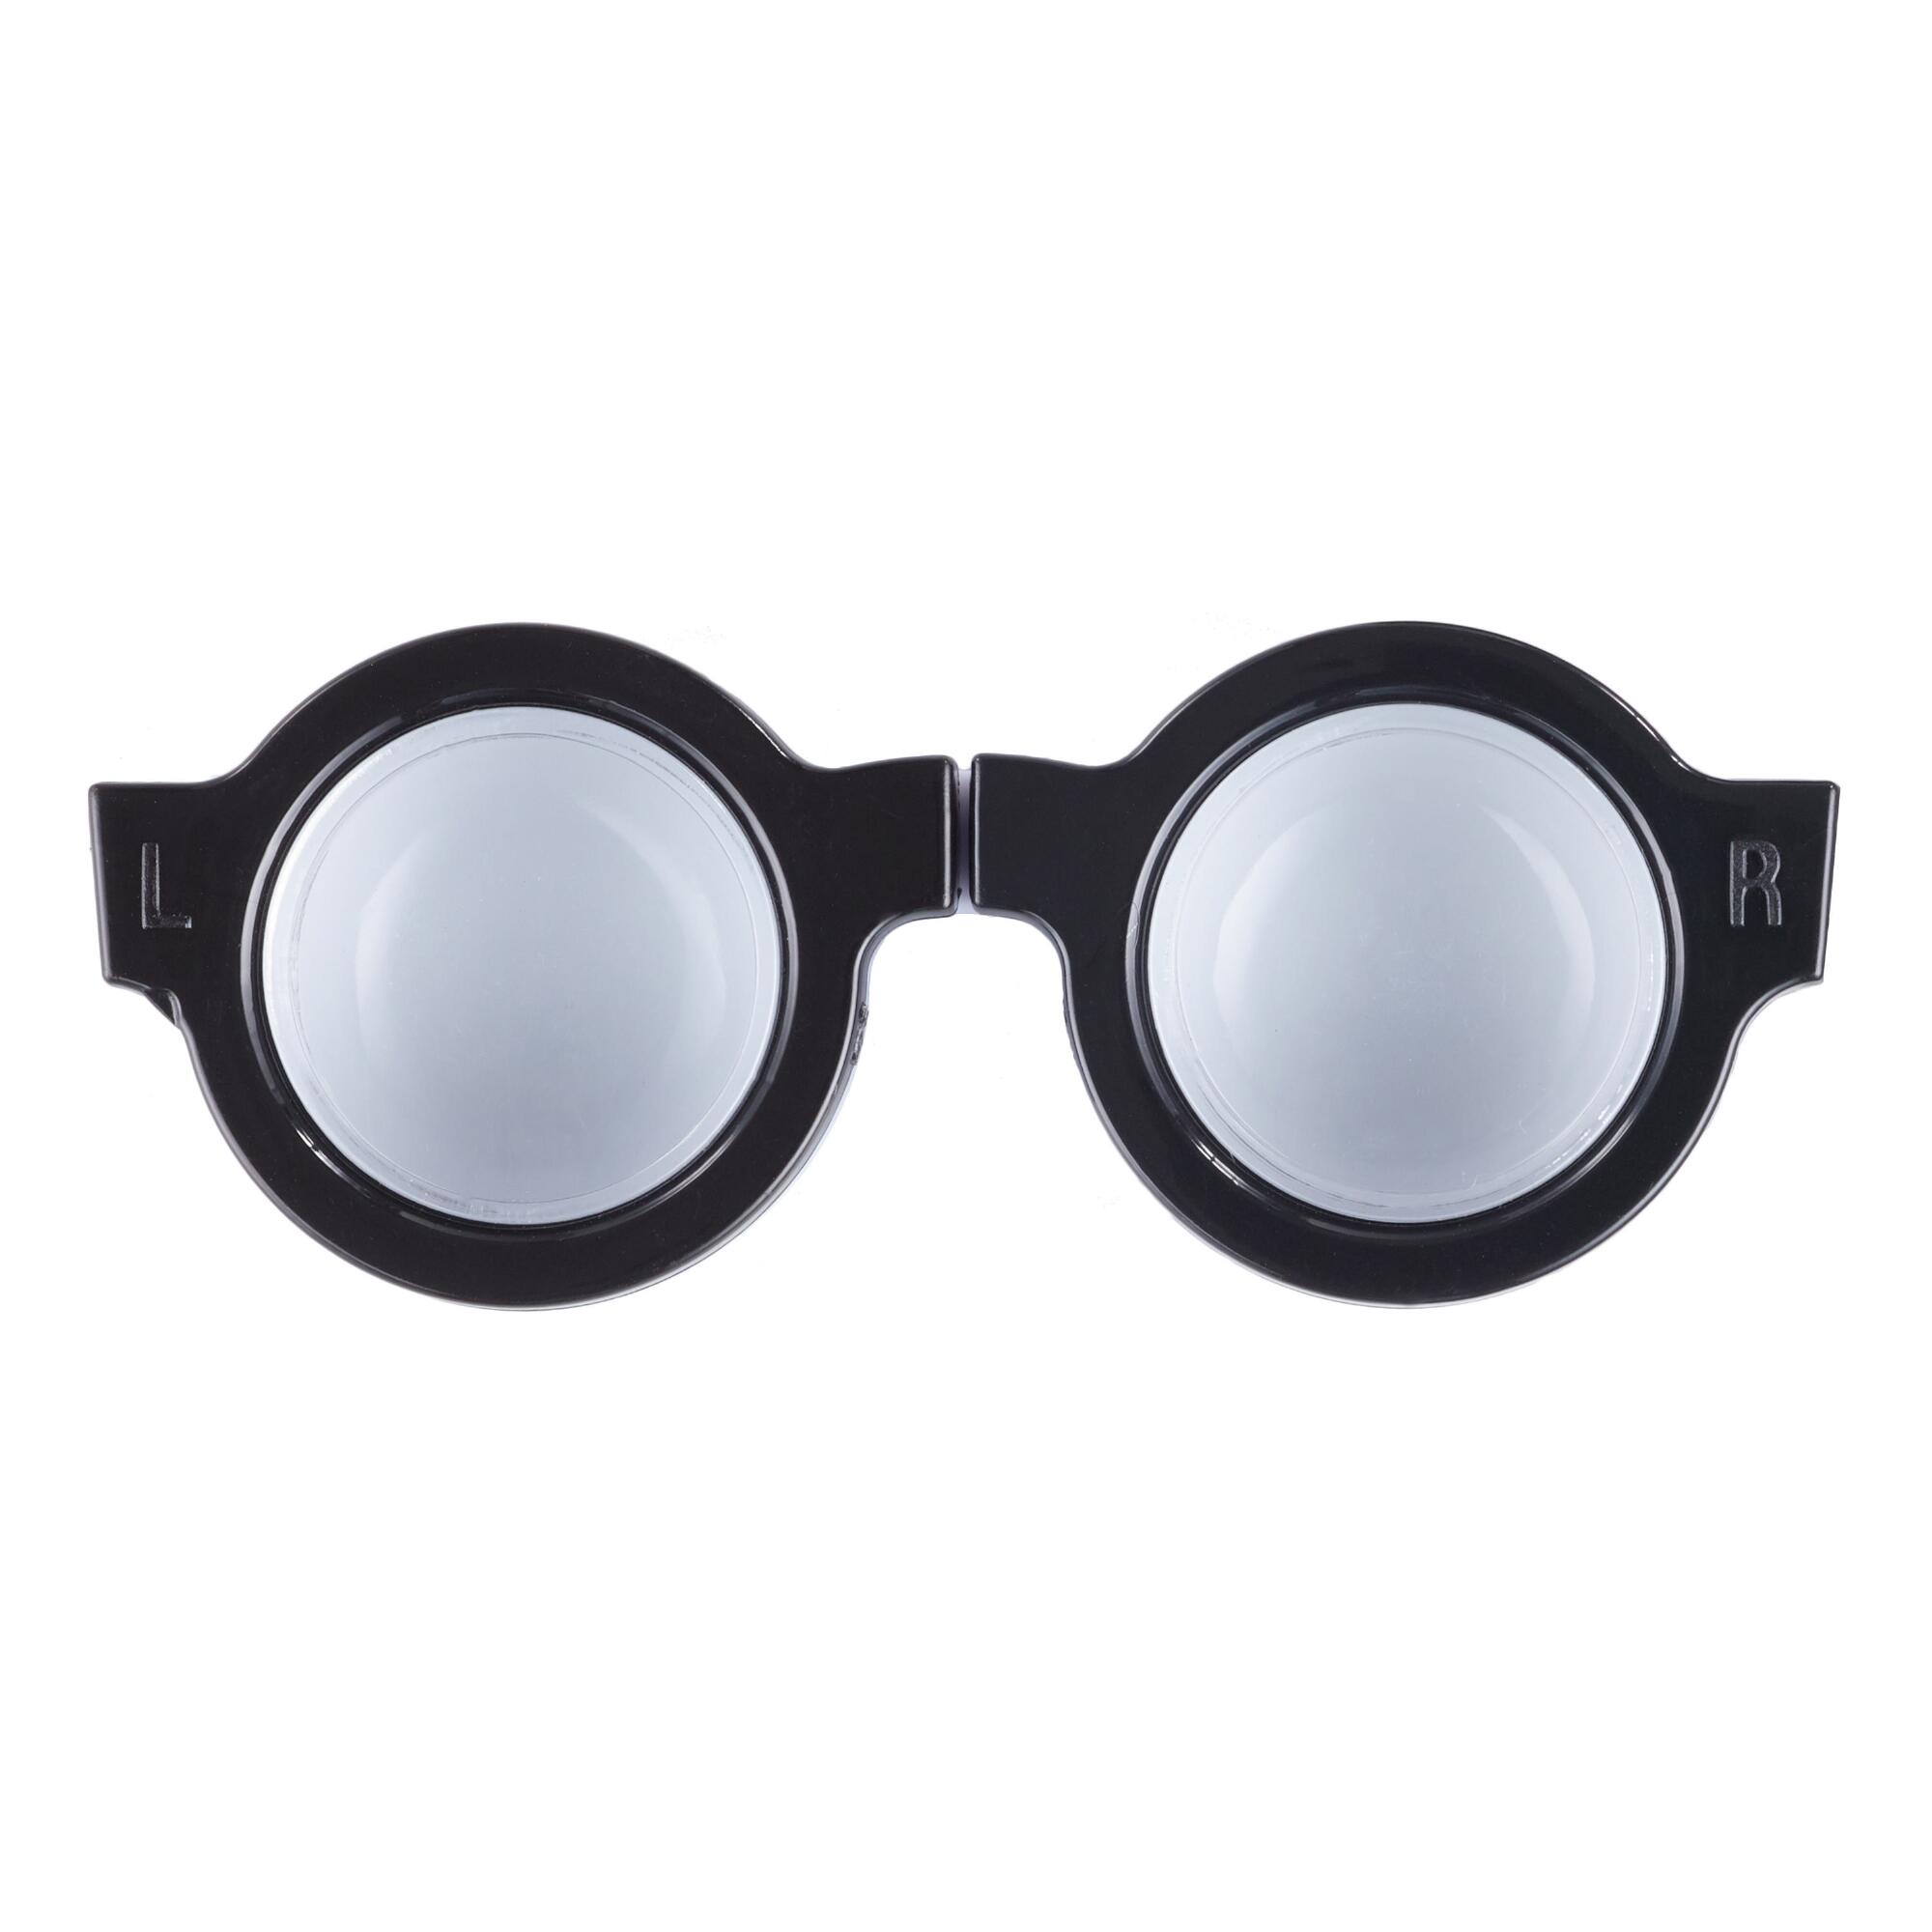 Kikkerland Round Glasses Contact Lens Case by World Market